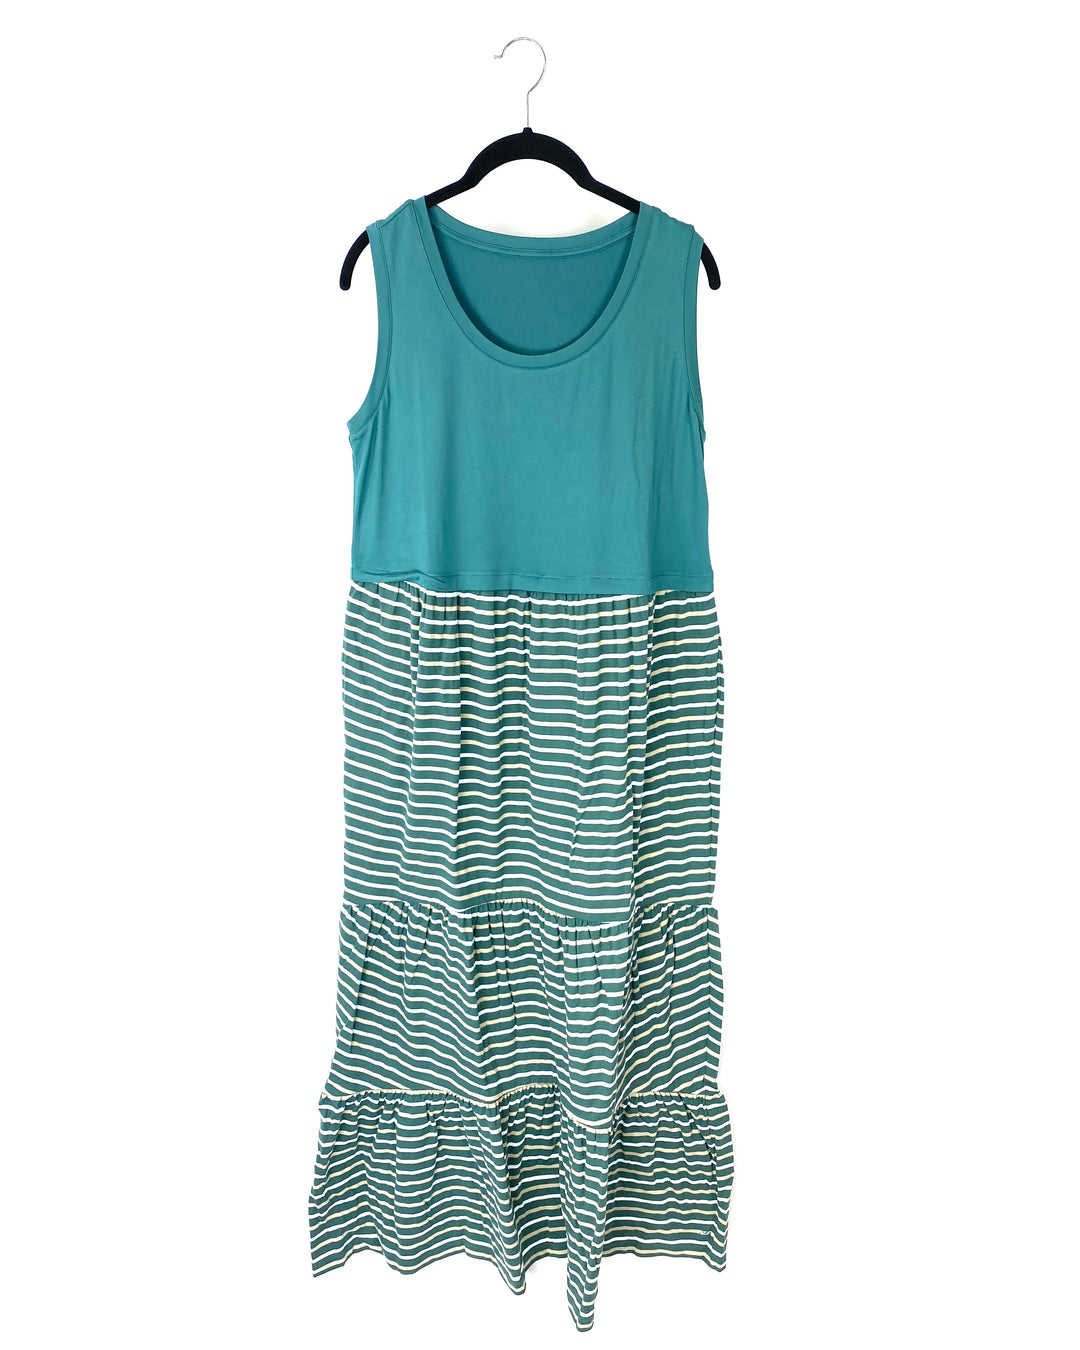 Green Striped Ruffled Dress - Small/Medium